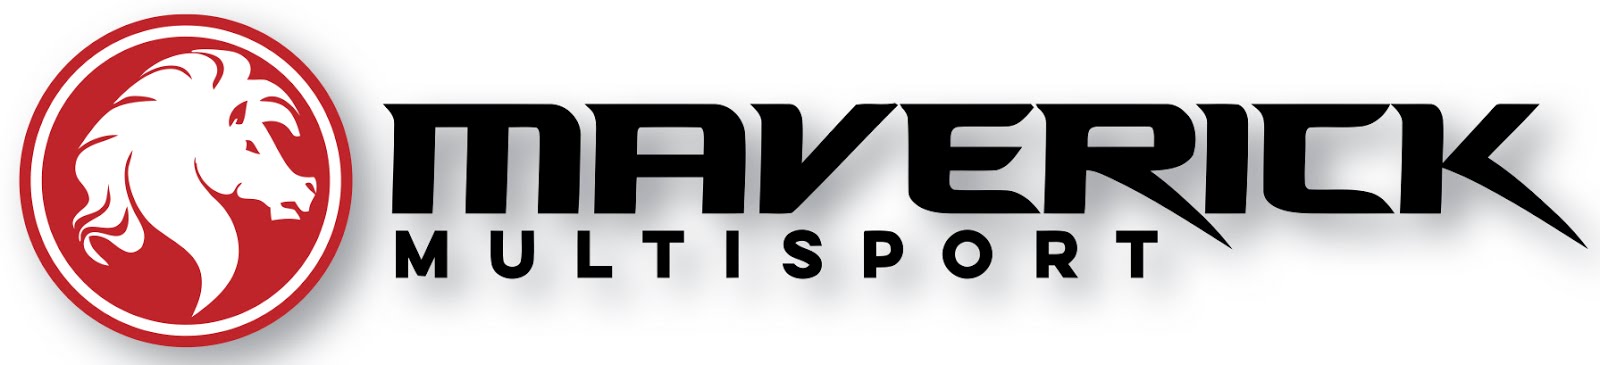 Team Maverick Multisport